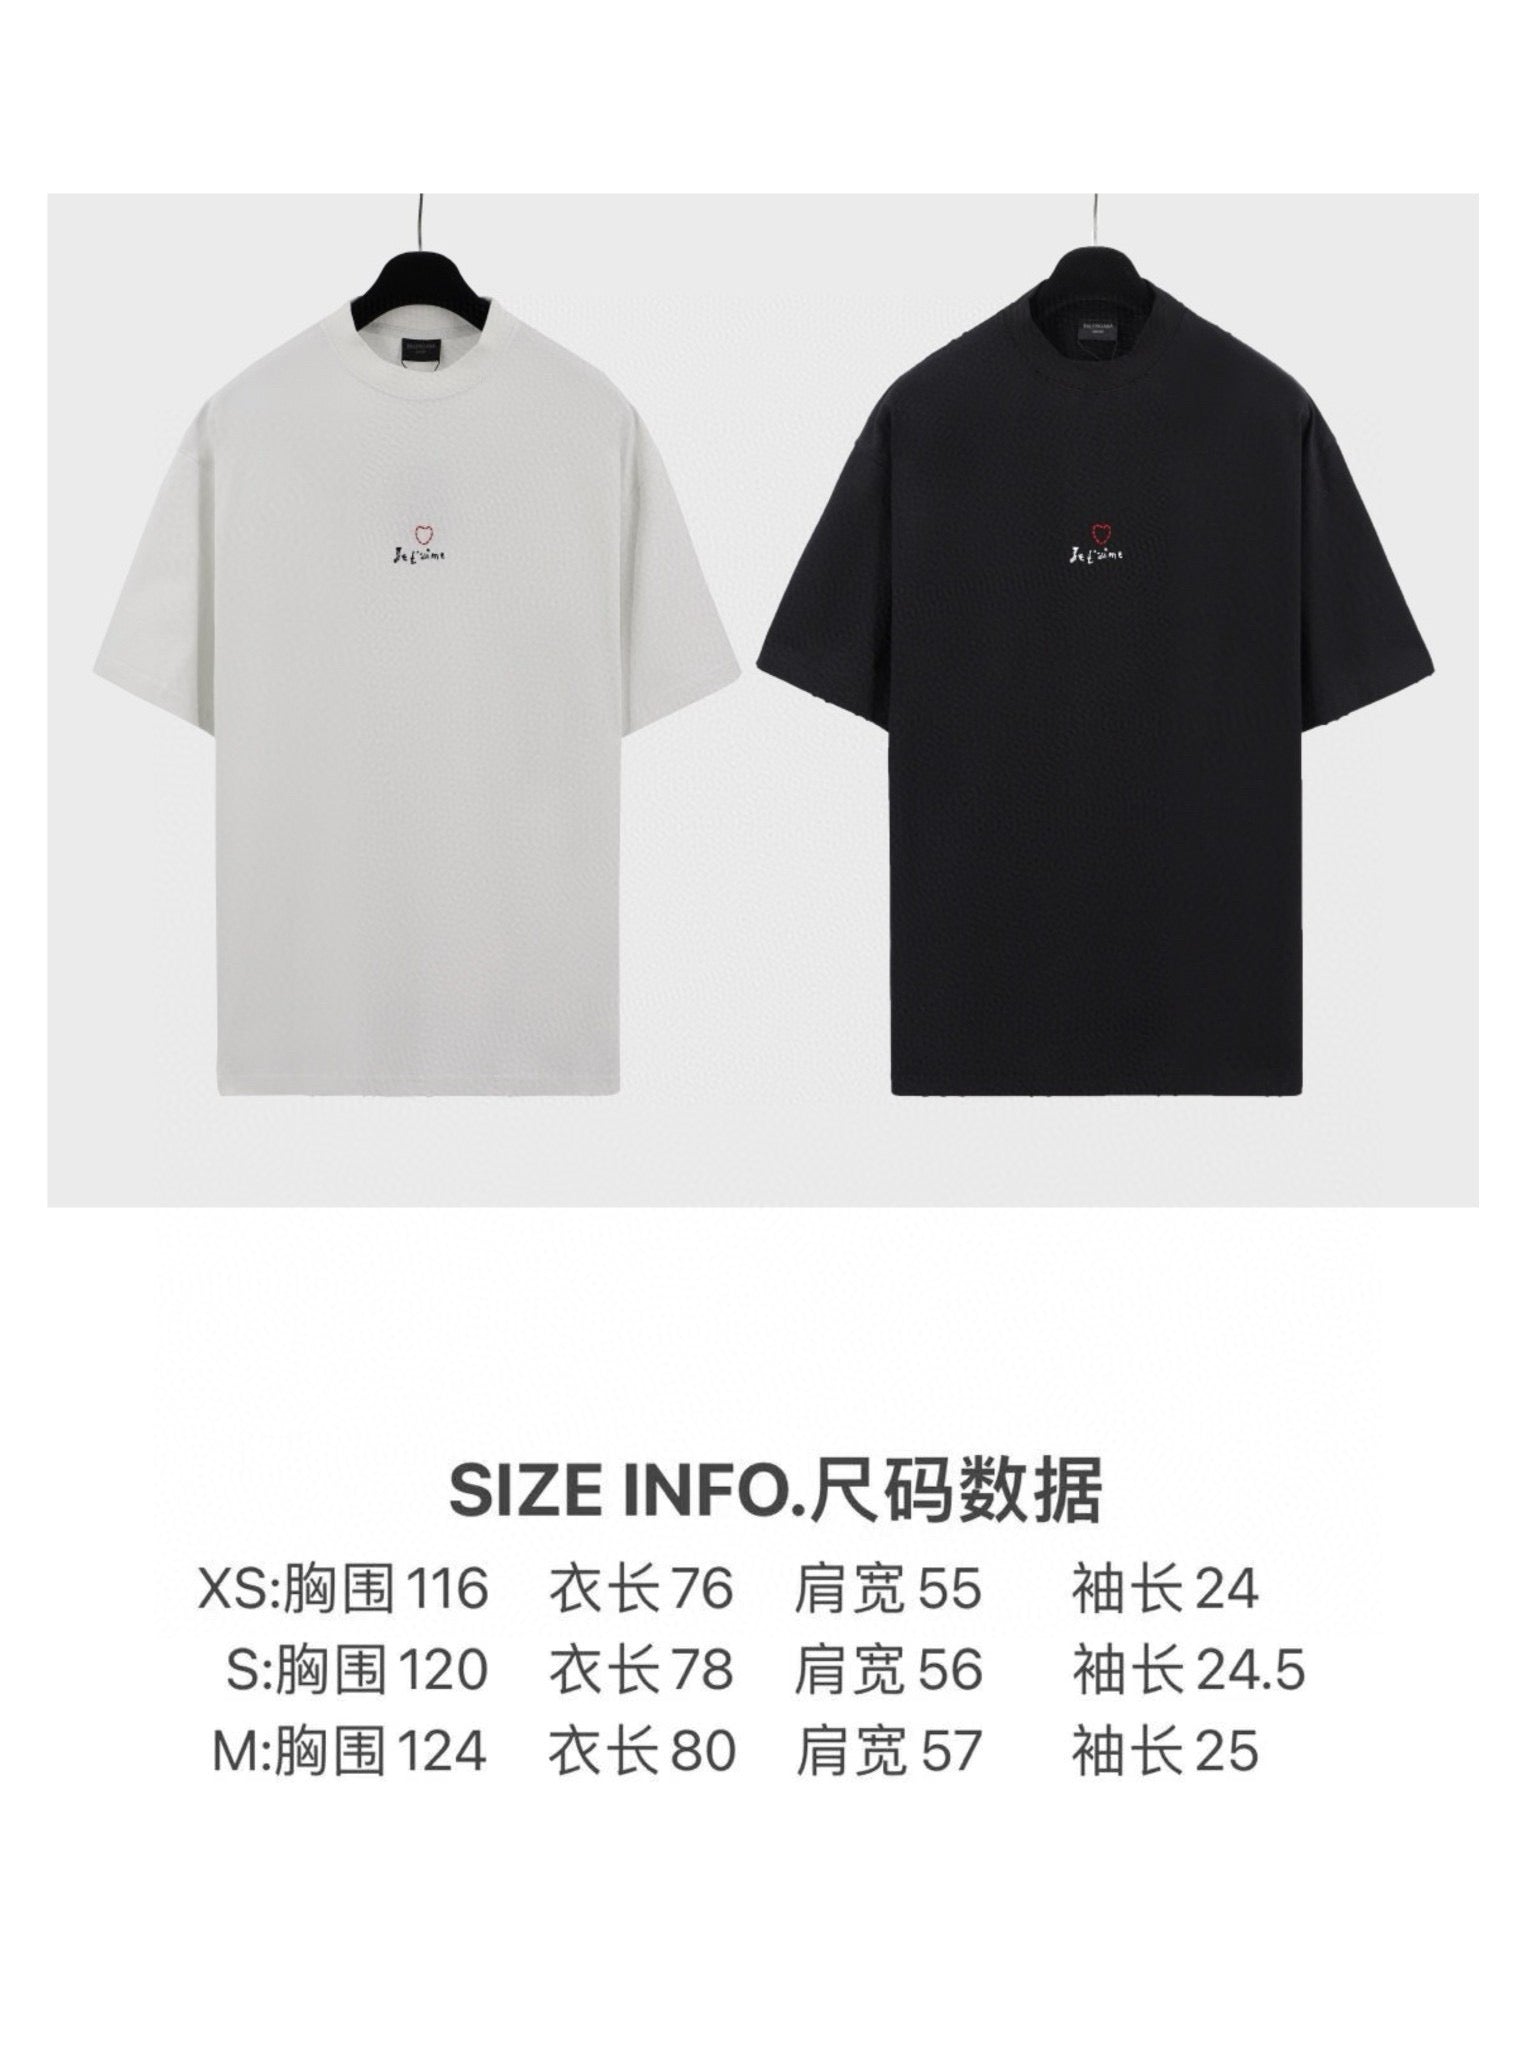 White and Black T-shirt